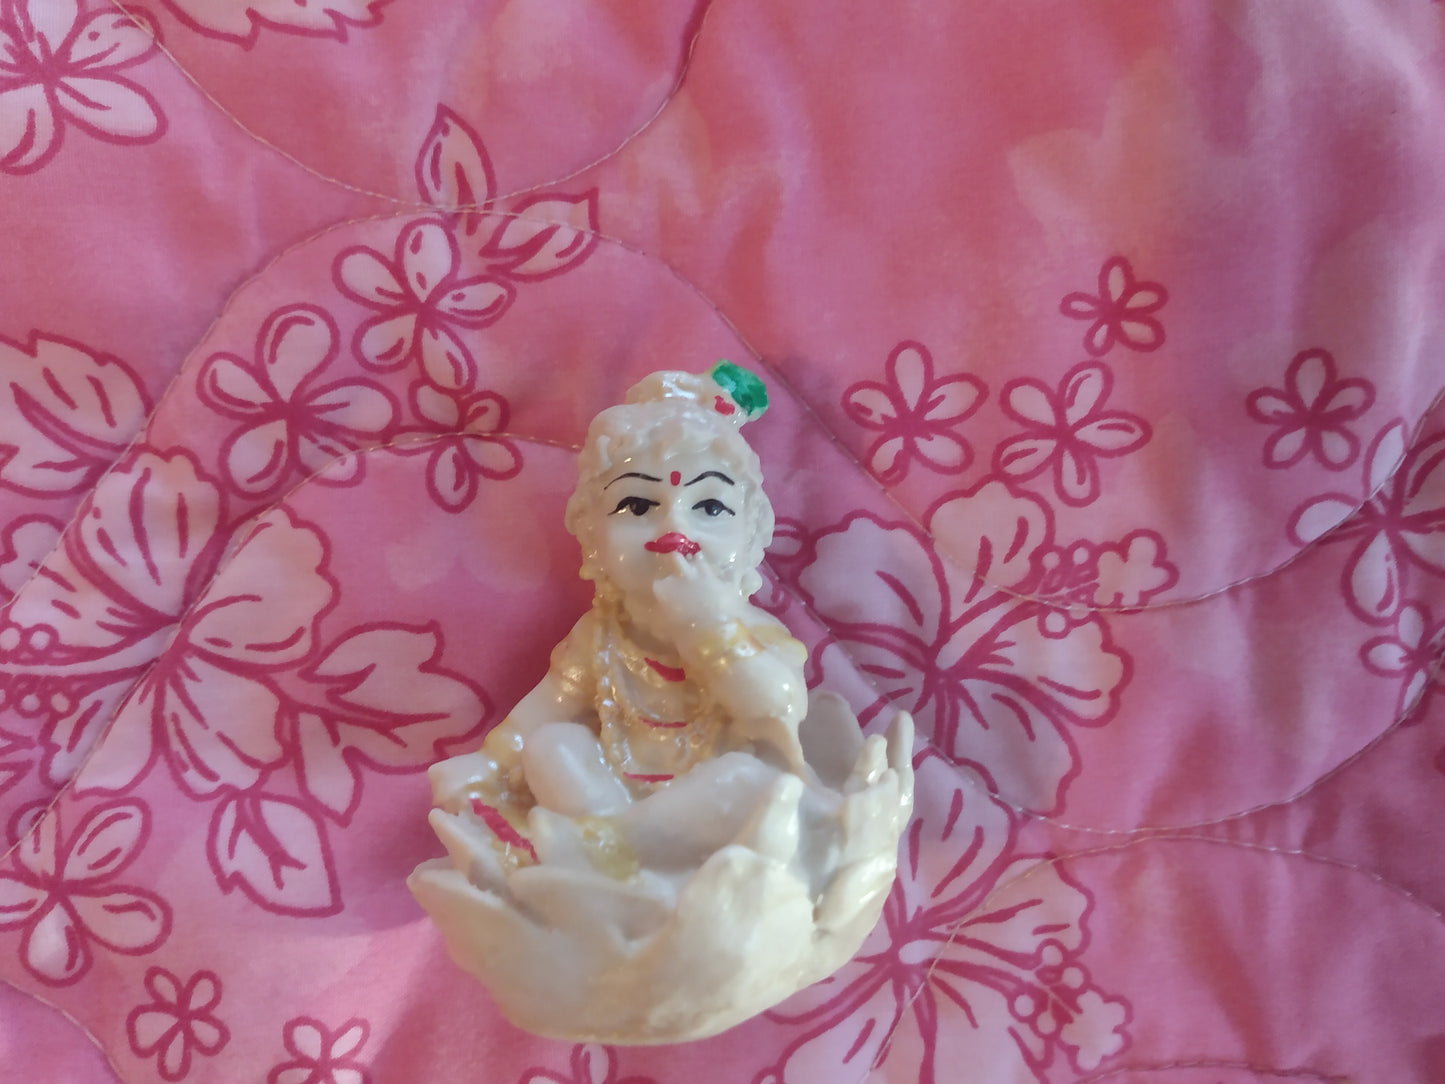 White Baby Krsna in Lotus Flower Statue